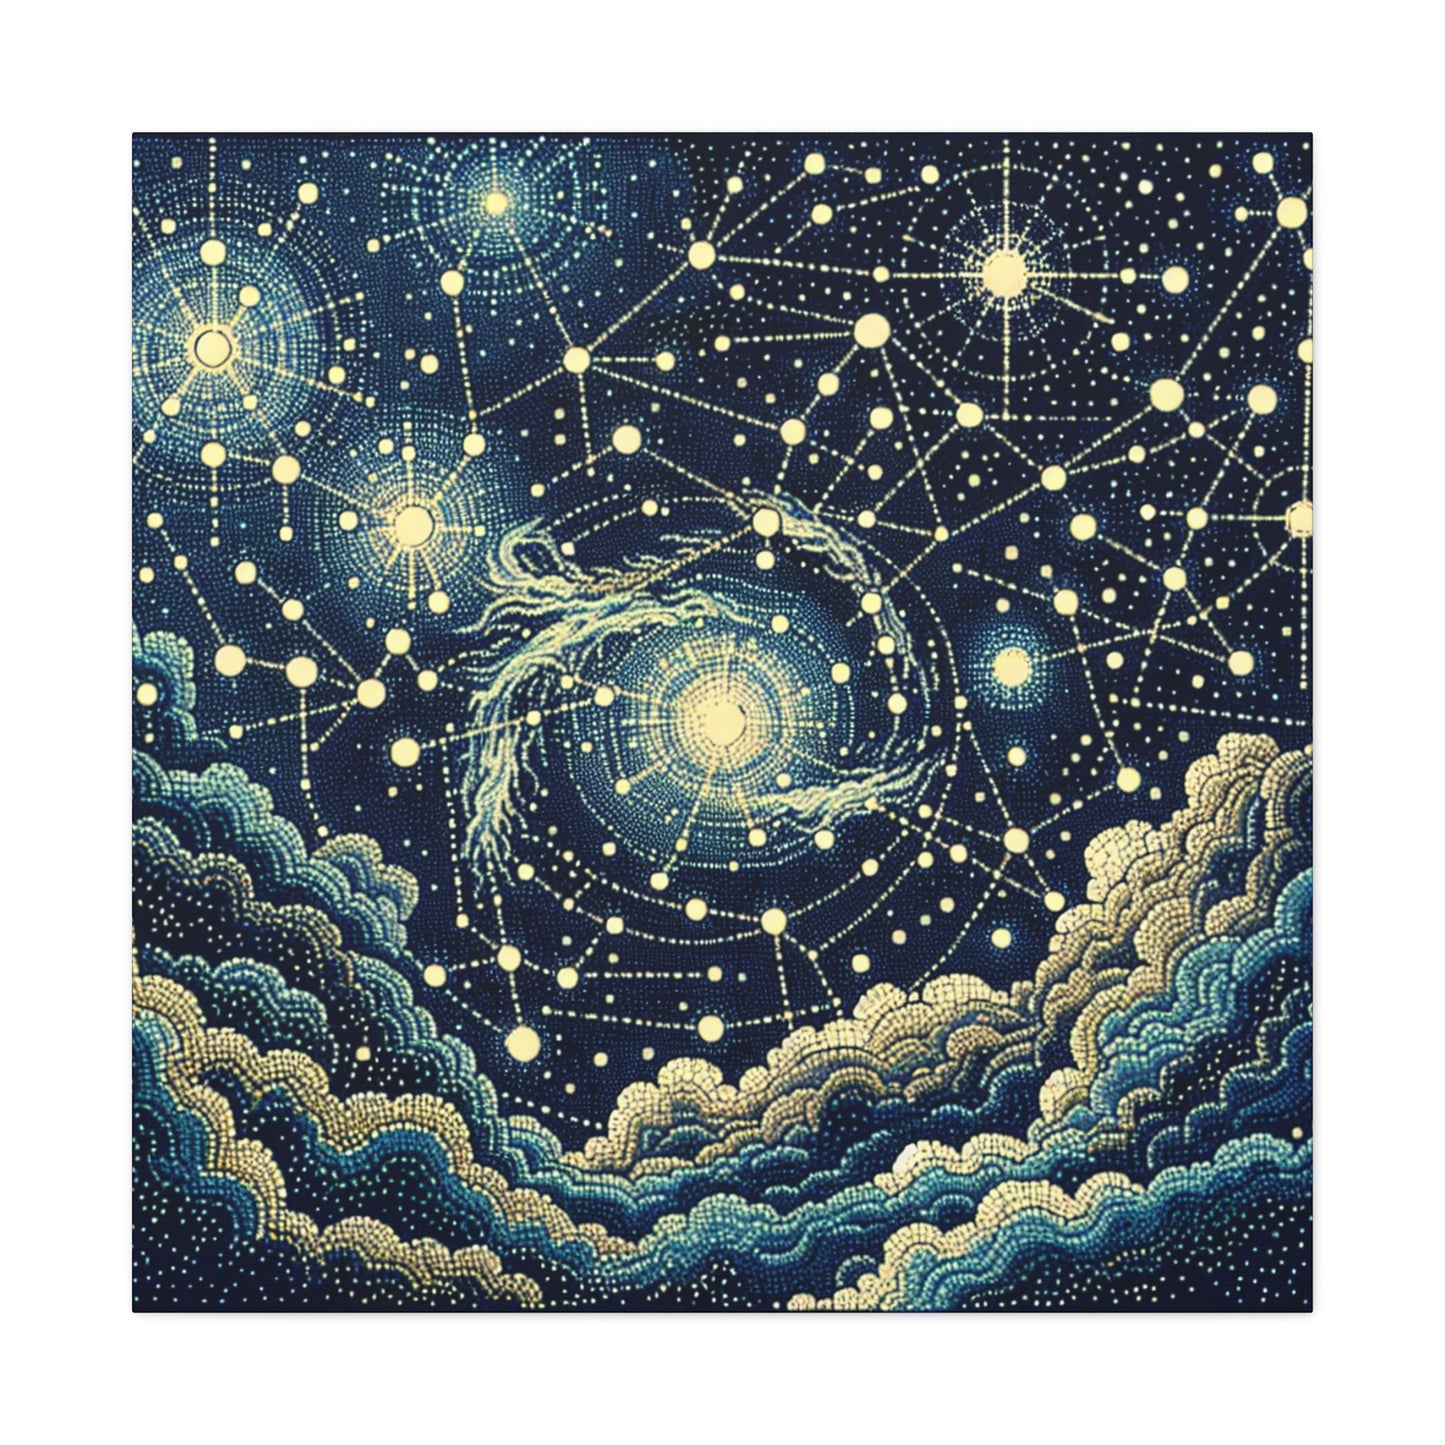 "Dotting the Heavens" - El estilo puntillismo alienígena de Canva